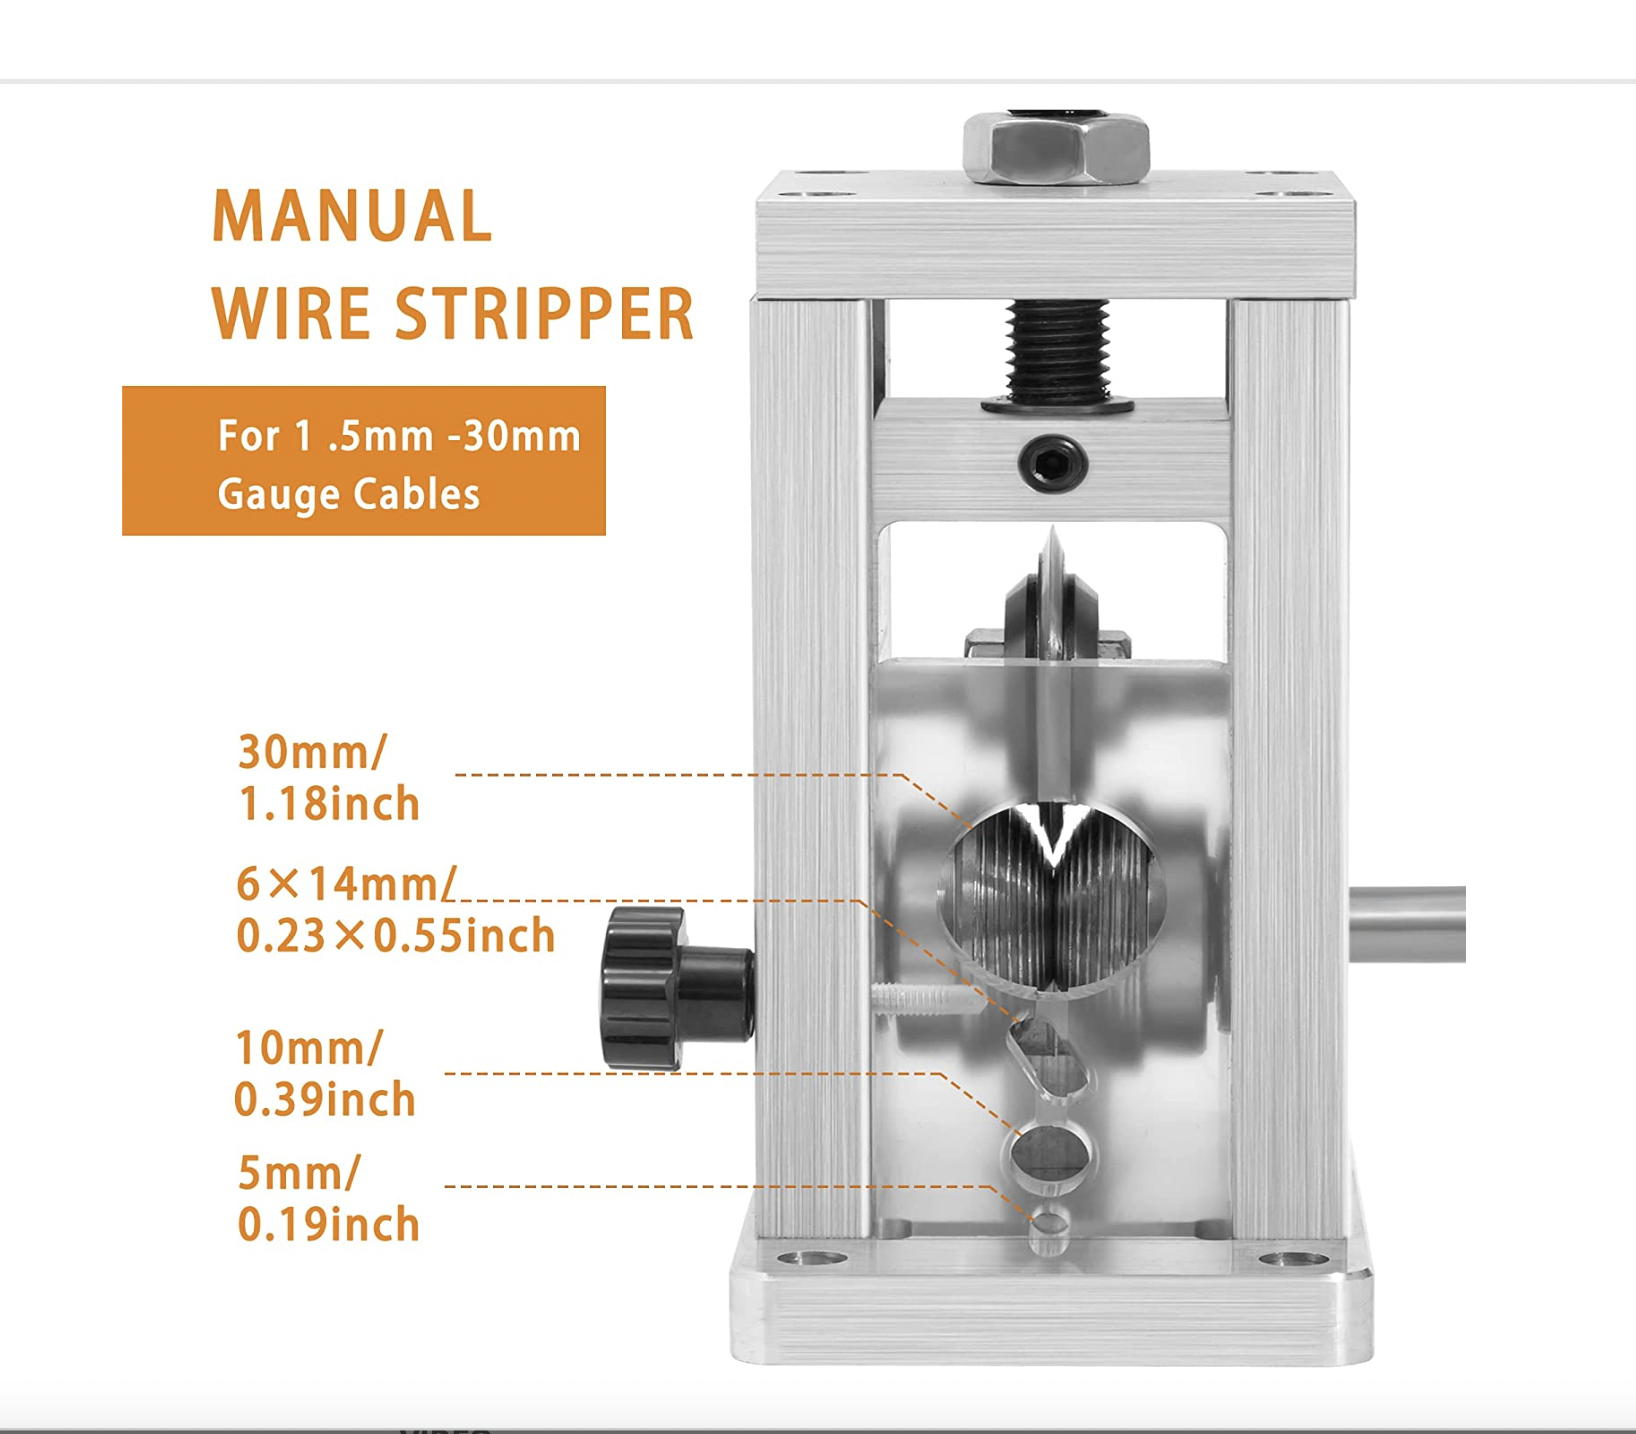 Upgrade-Manual Spiral Patented Wire Stripping Machine, Hand Crank Wire Stripper for Scrap Copper Stripping Diameter 2-30mm